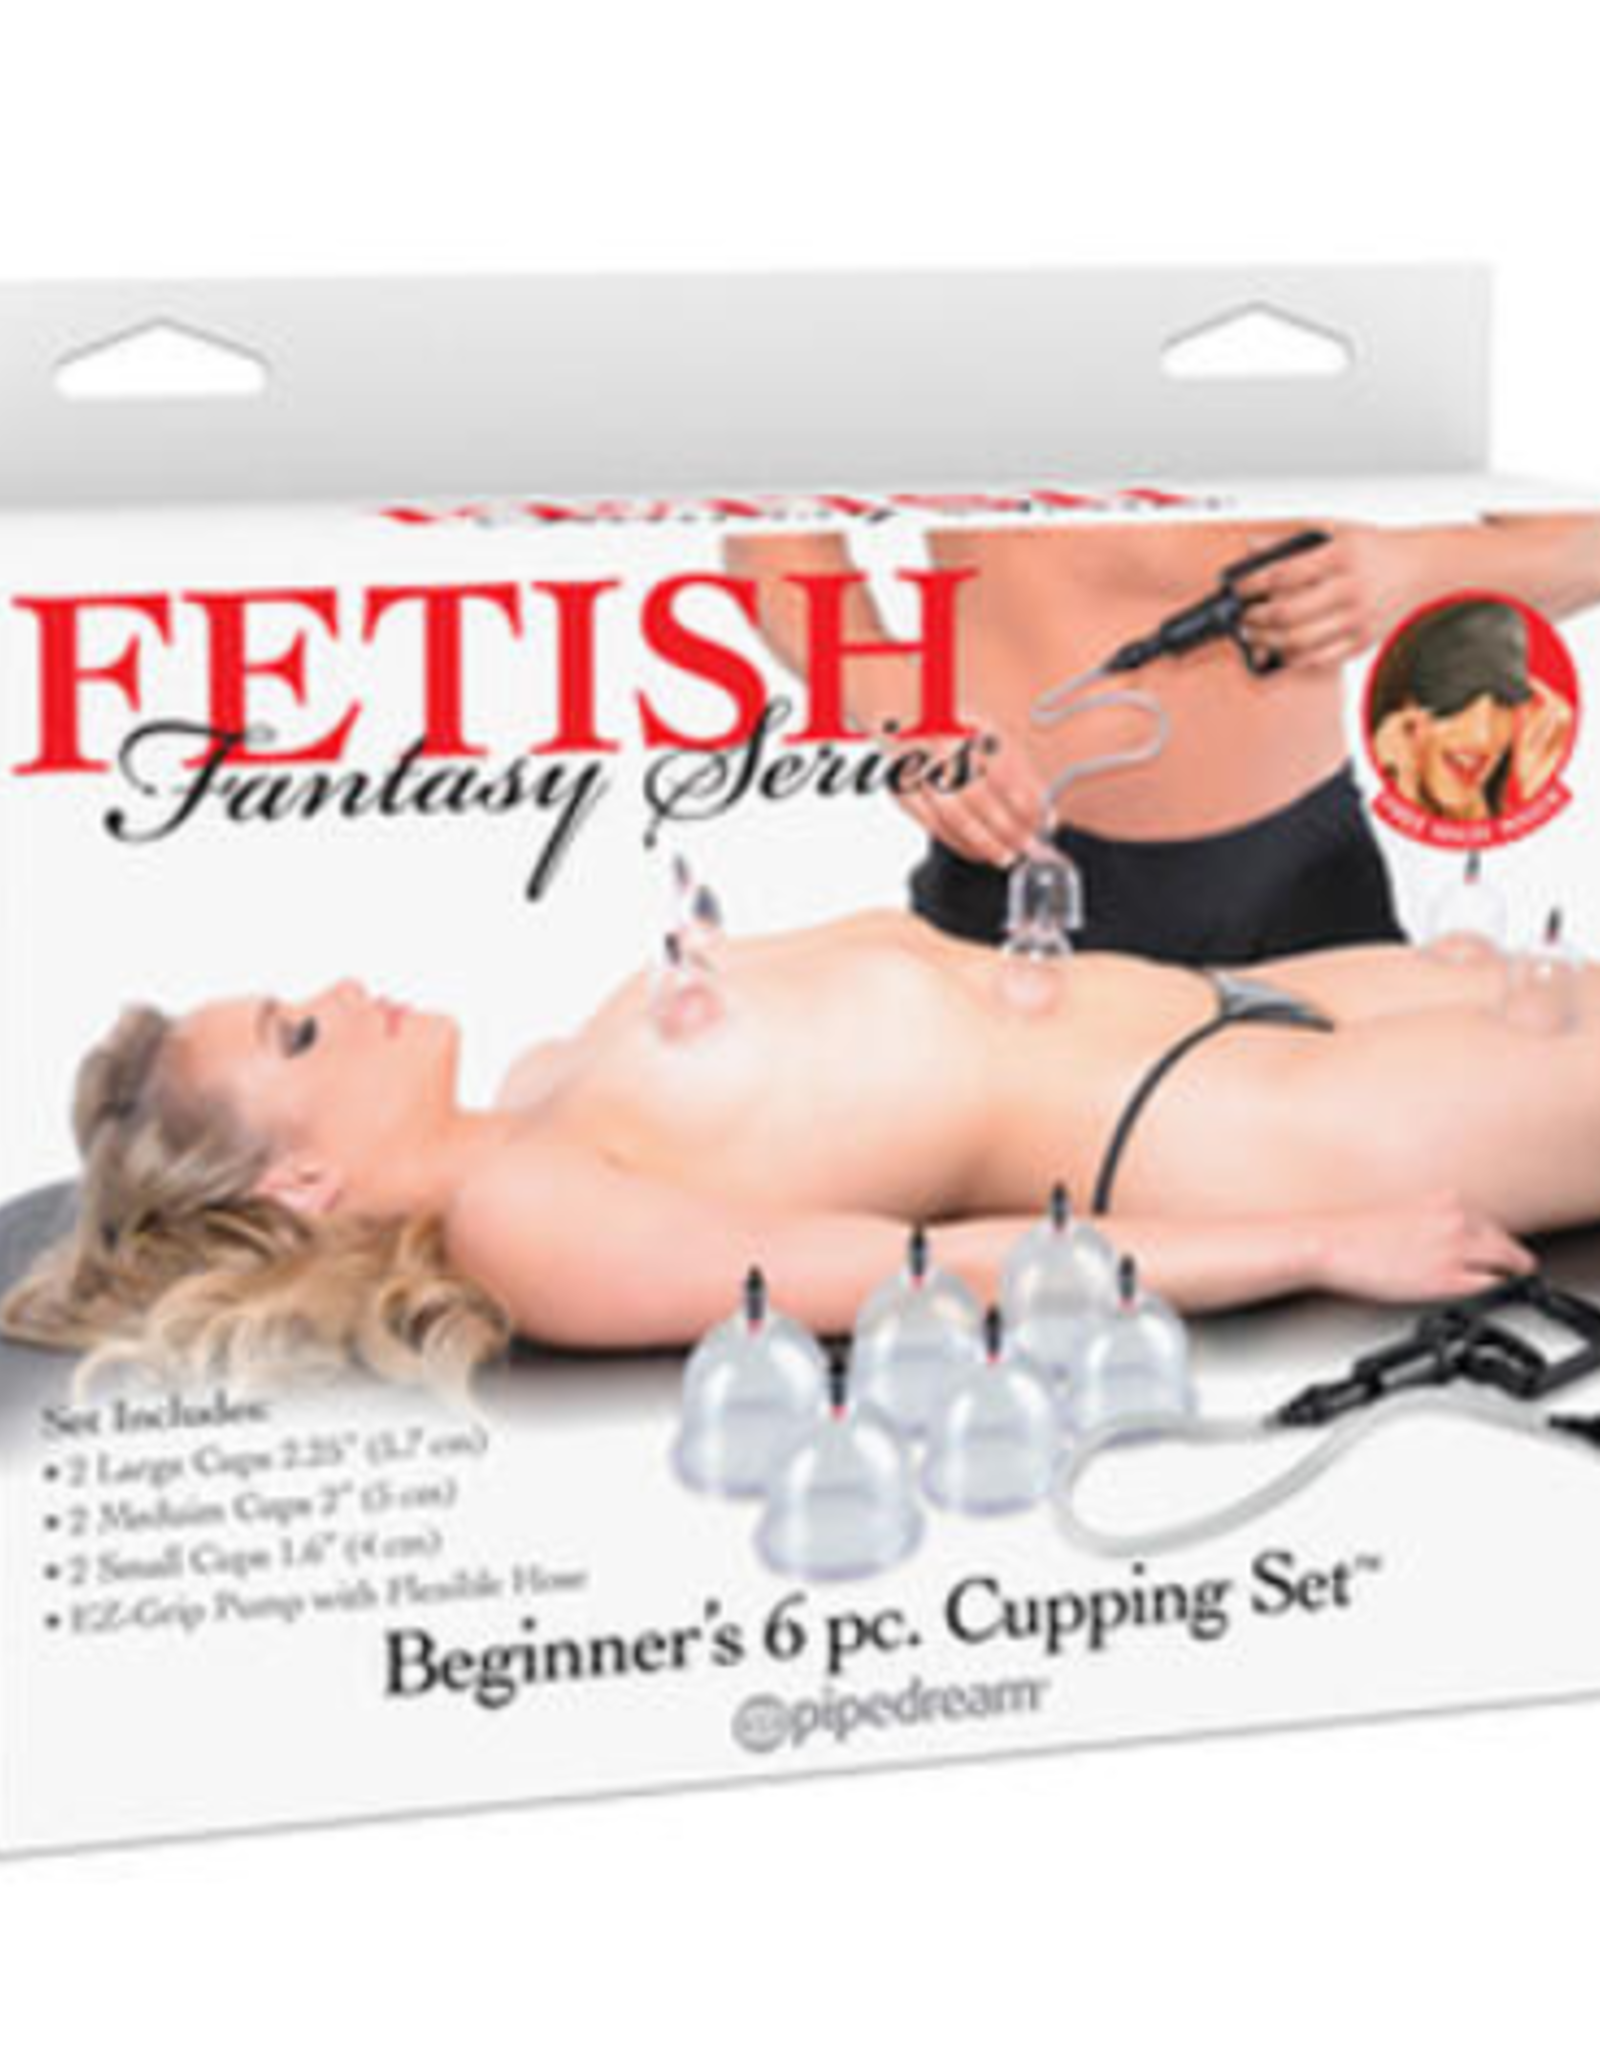 Fetish Fantasy 6 Piece Cupping Set Beginners